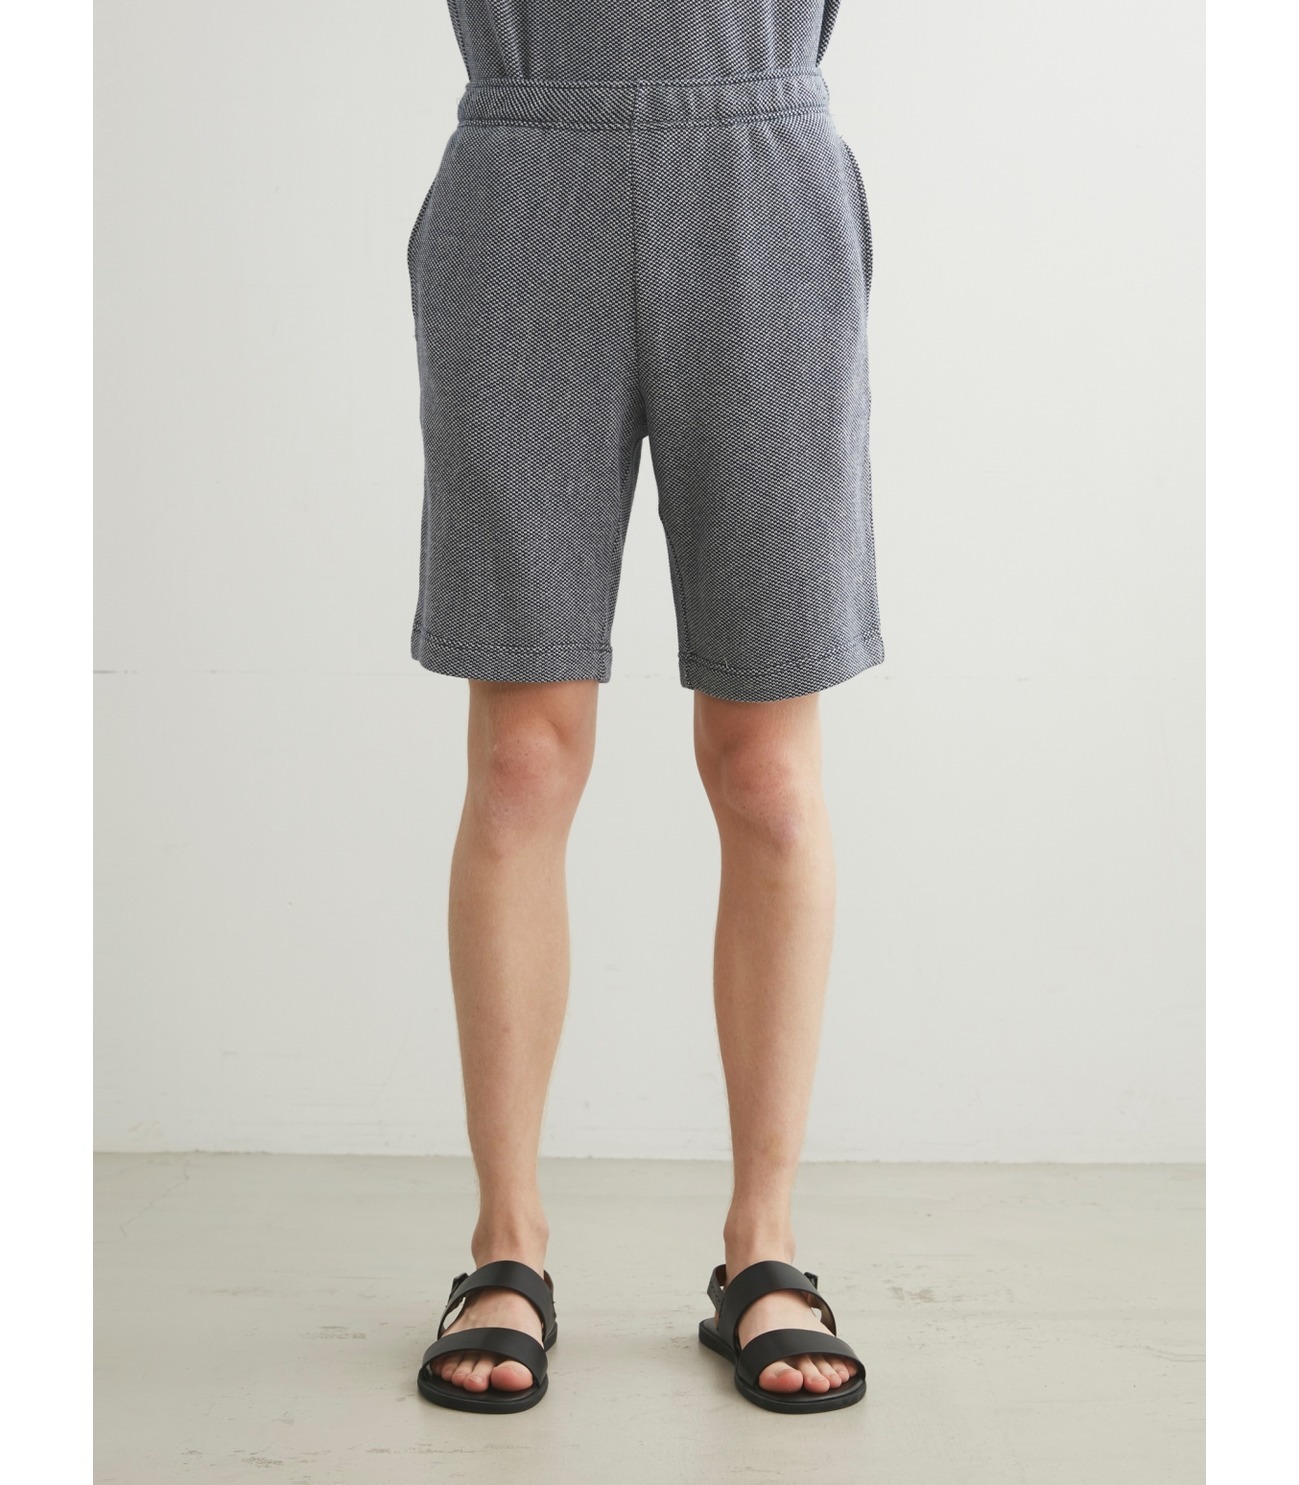 Men's inlay shorts 詳細画像 grey 9